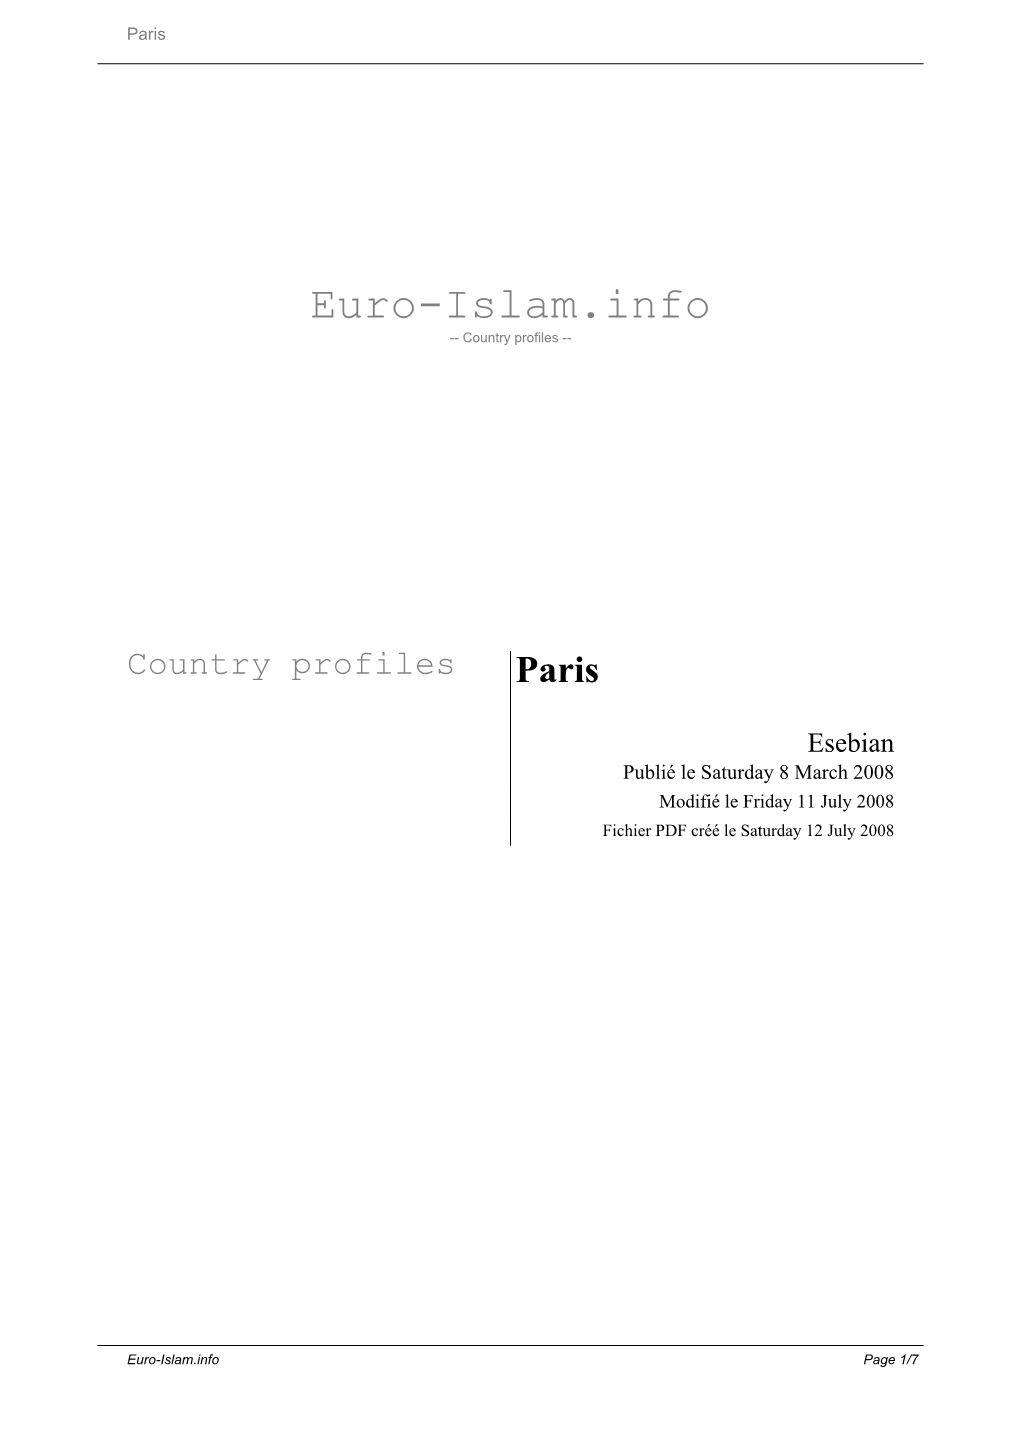 Euro-Islam.Info -- Country Profiles